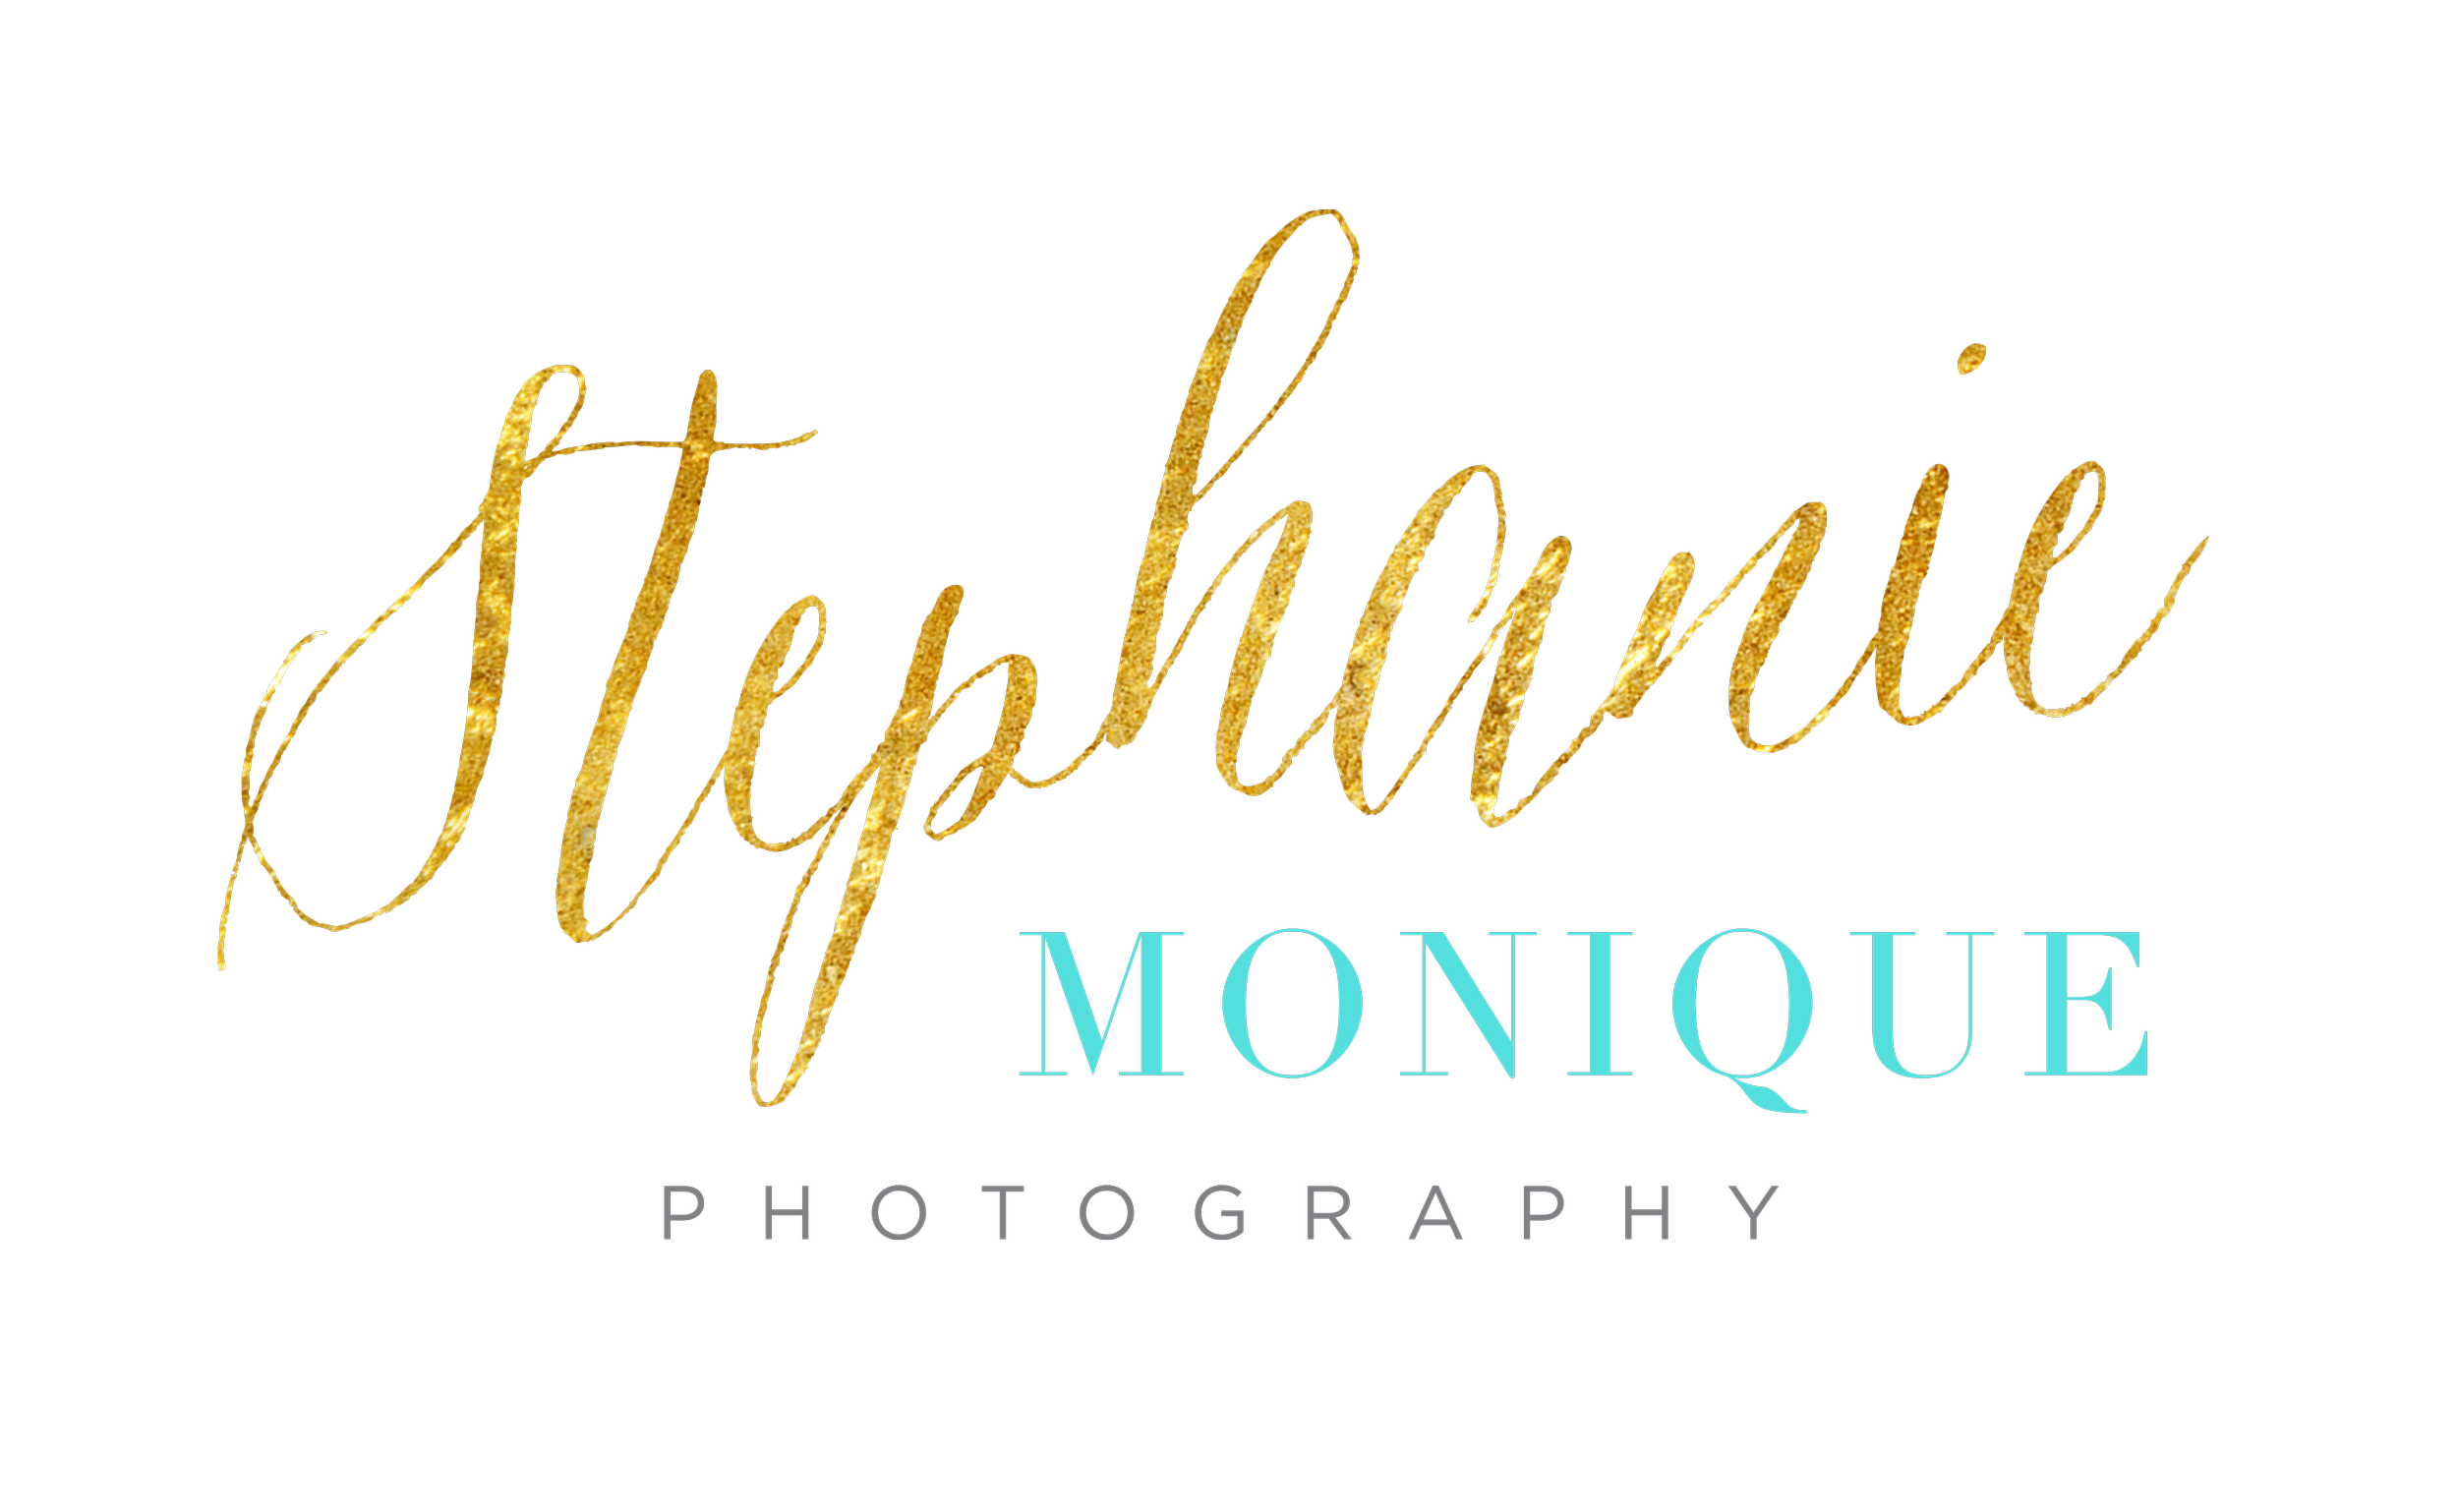 Stephanie Monique Photography